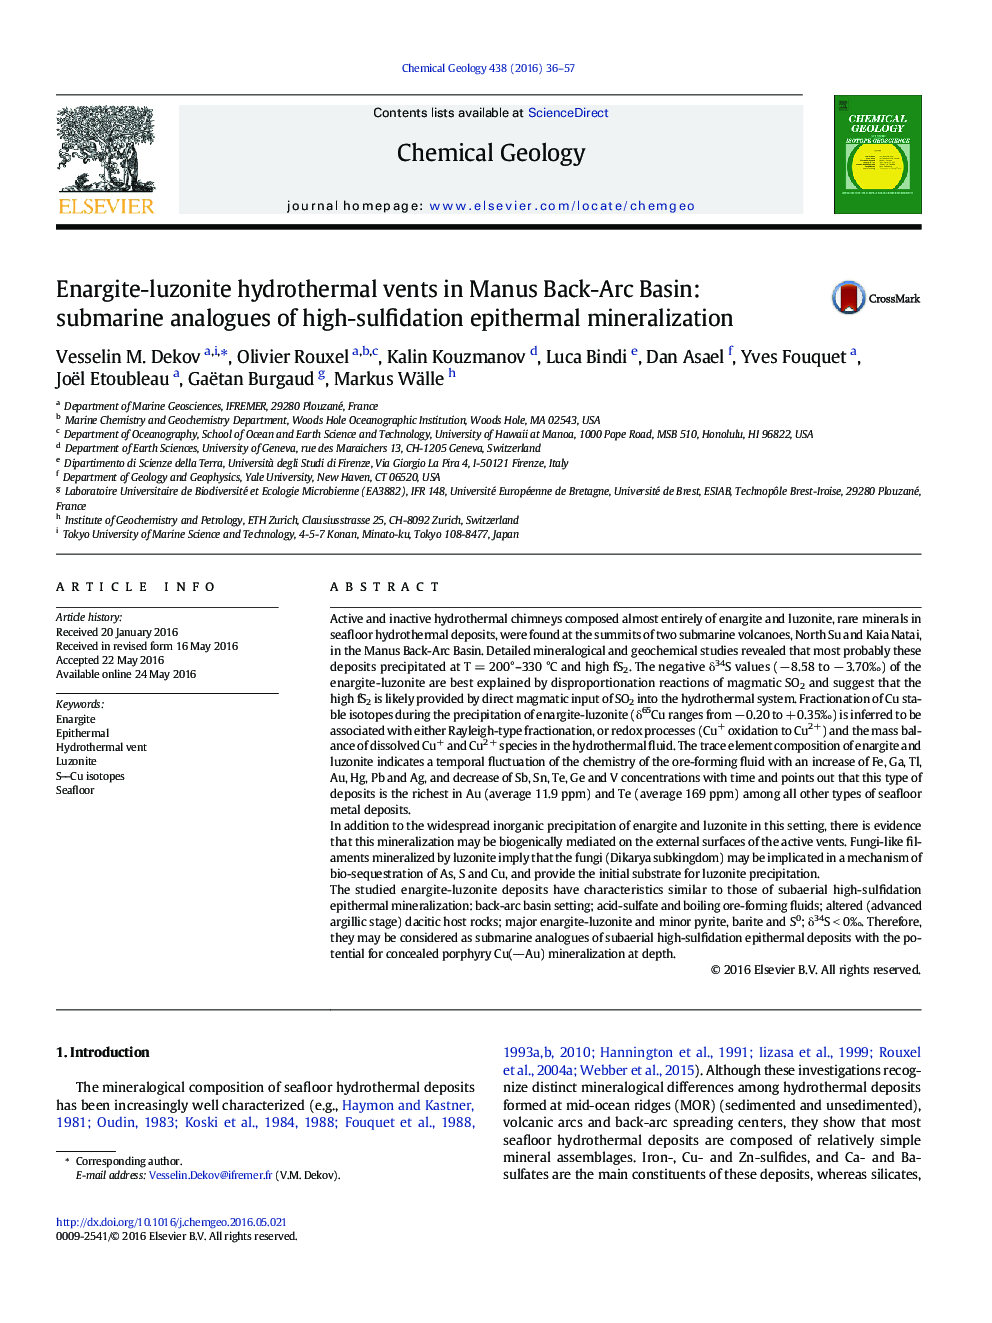 Enargite-luzonite hydrothermal vents in Manus Back-Arc Basin: submarine analogues of high-sulfidation epithermal mineralization